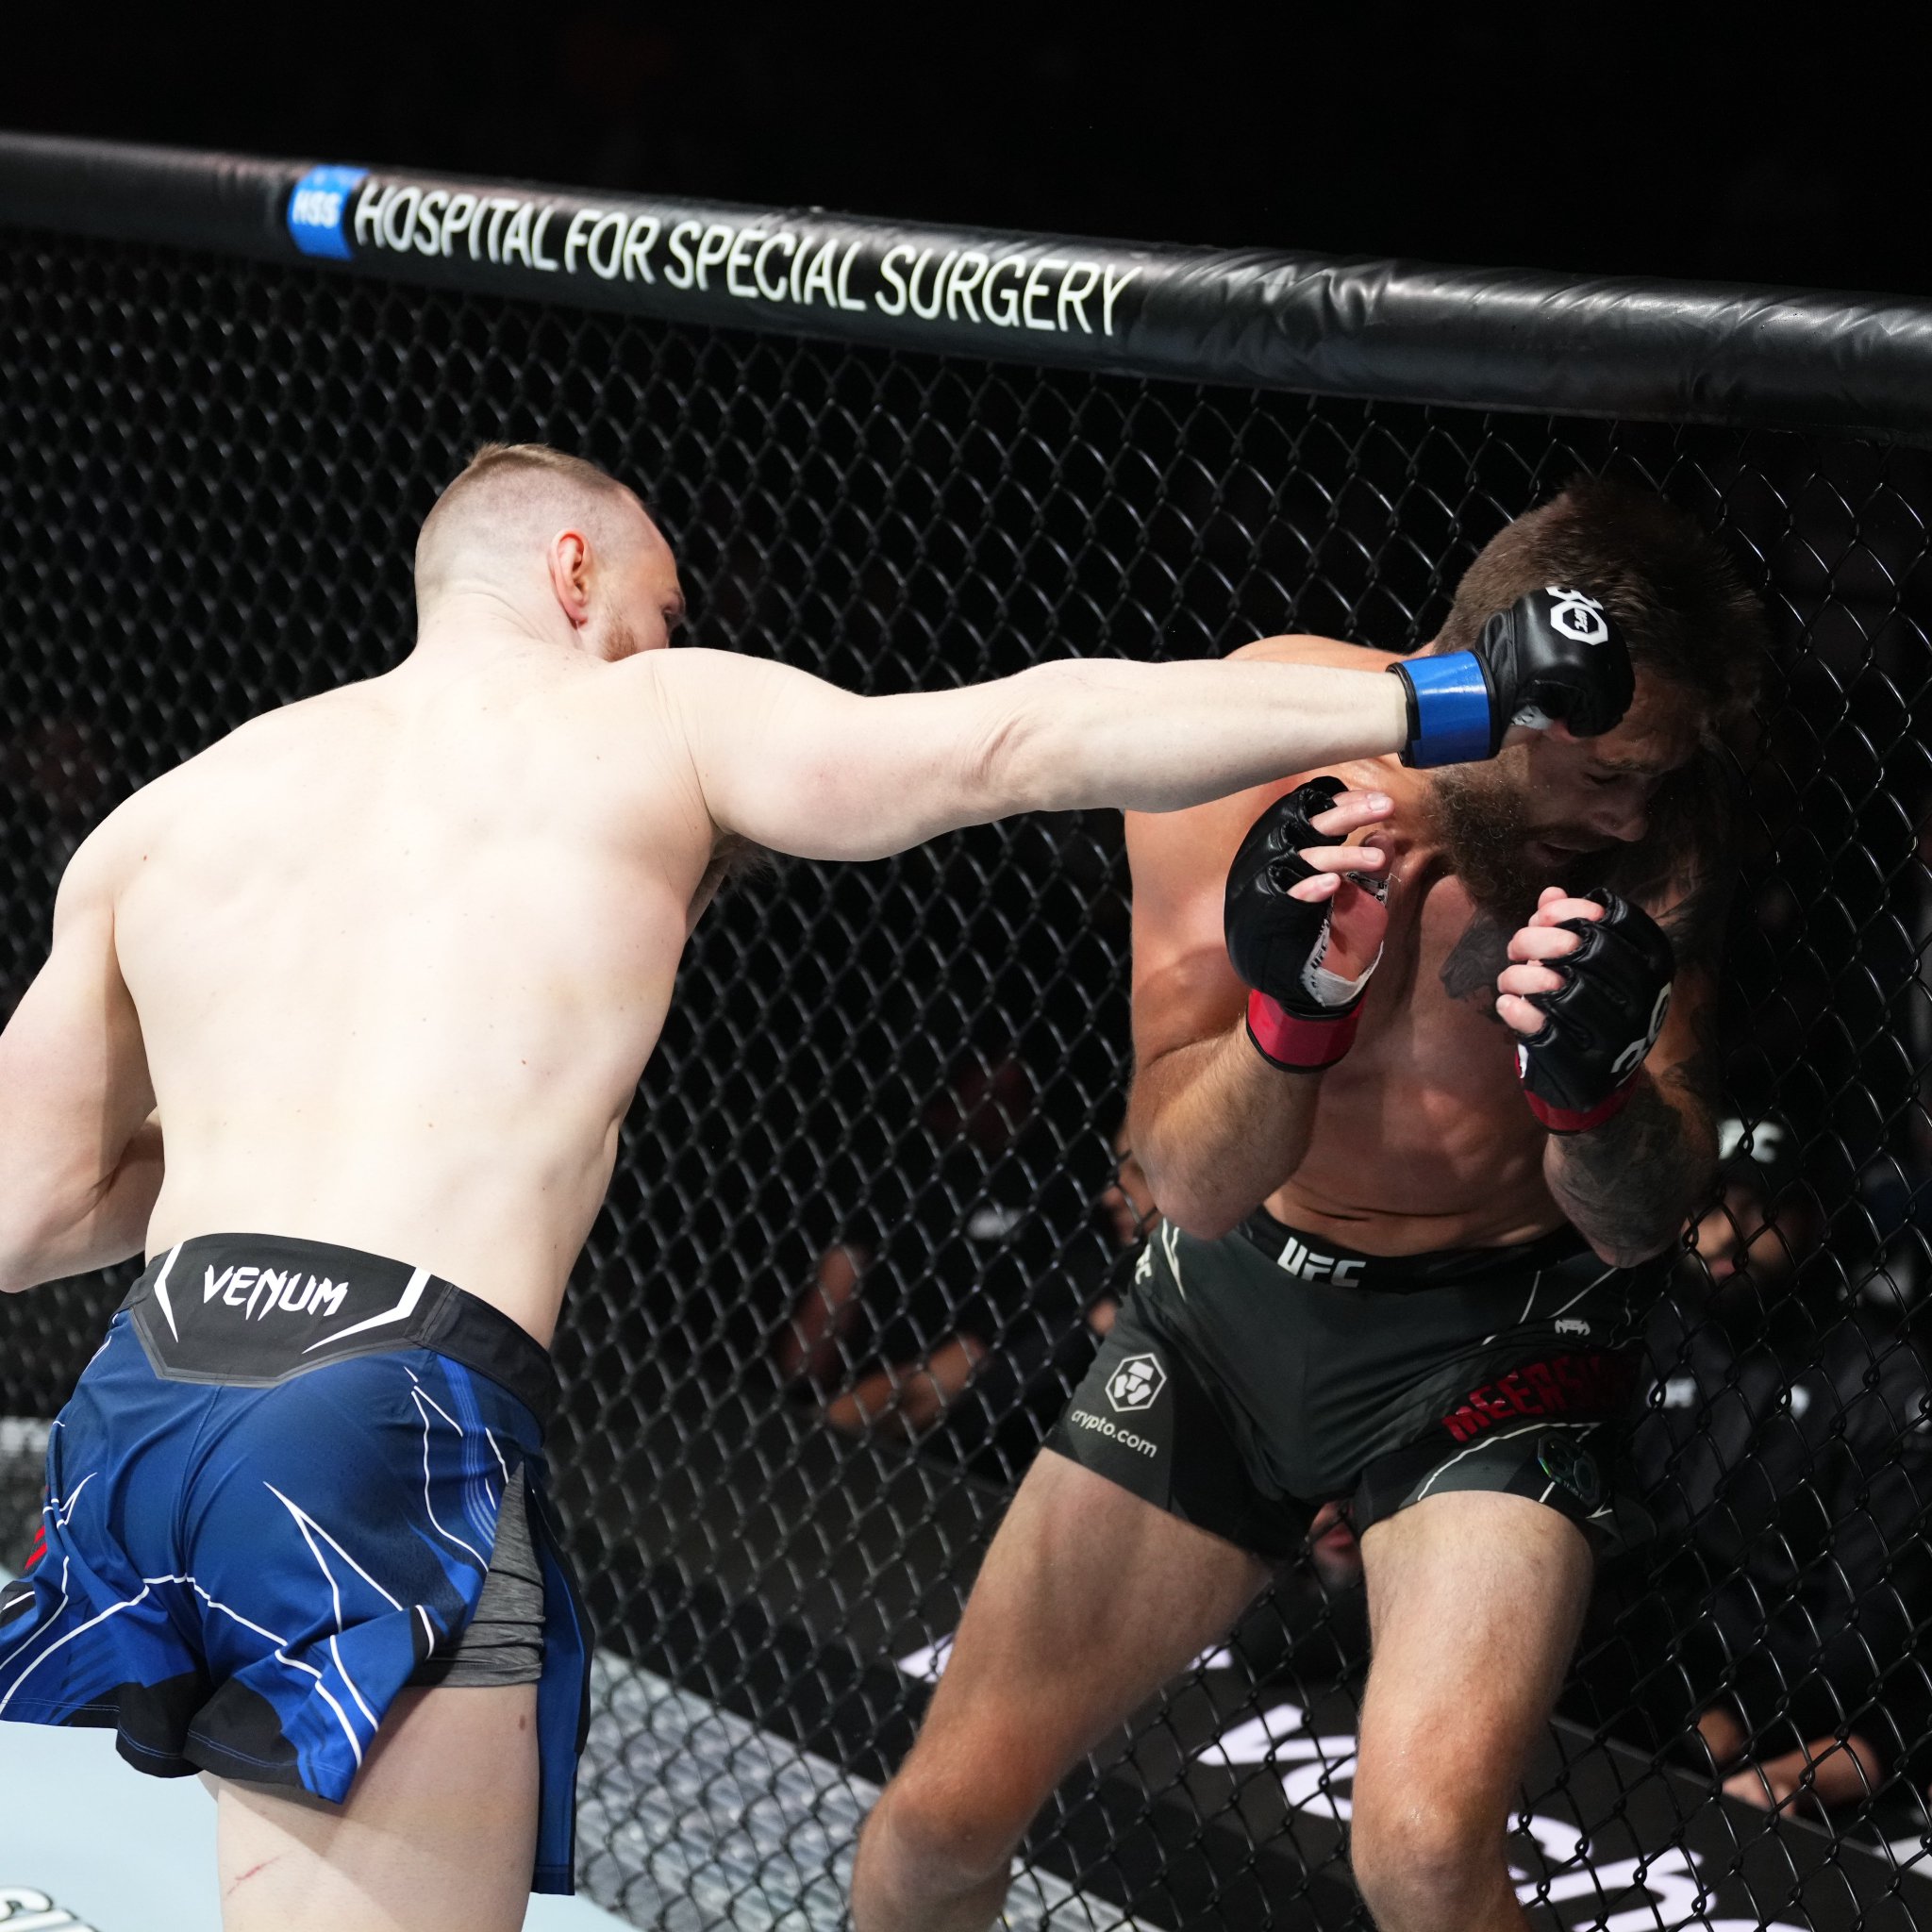 UFC 287 - Gerald Meerschaert vs Joseph Pyfer